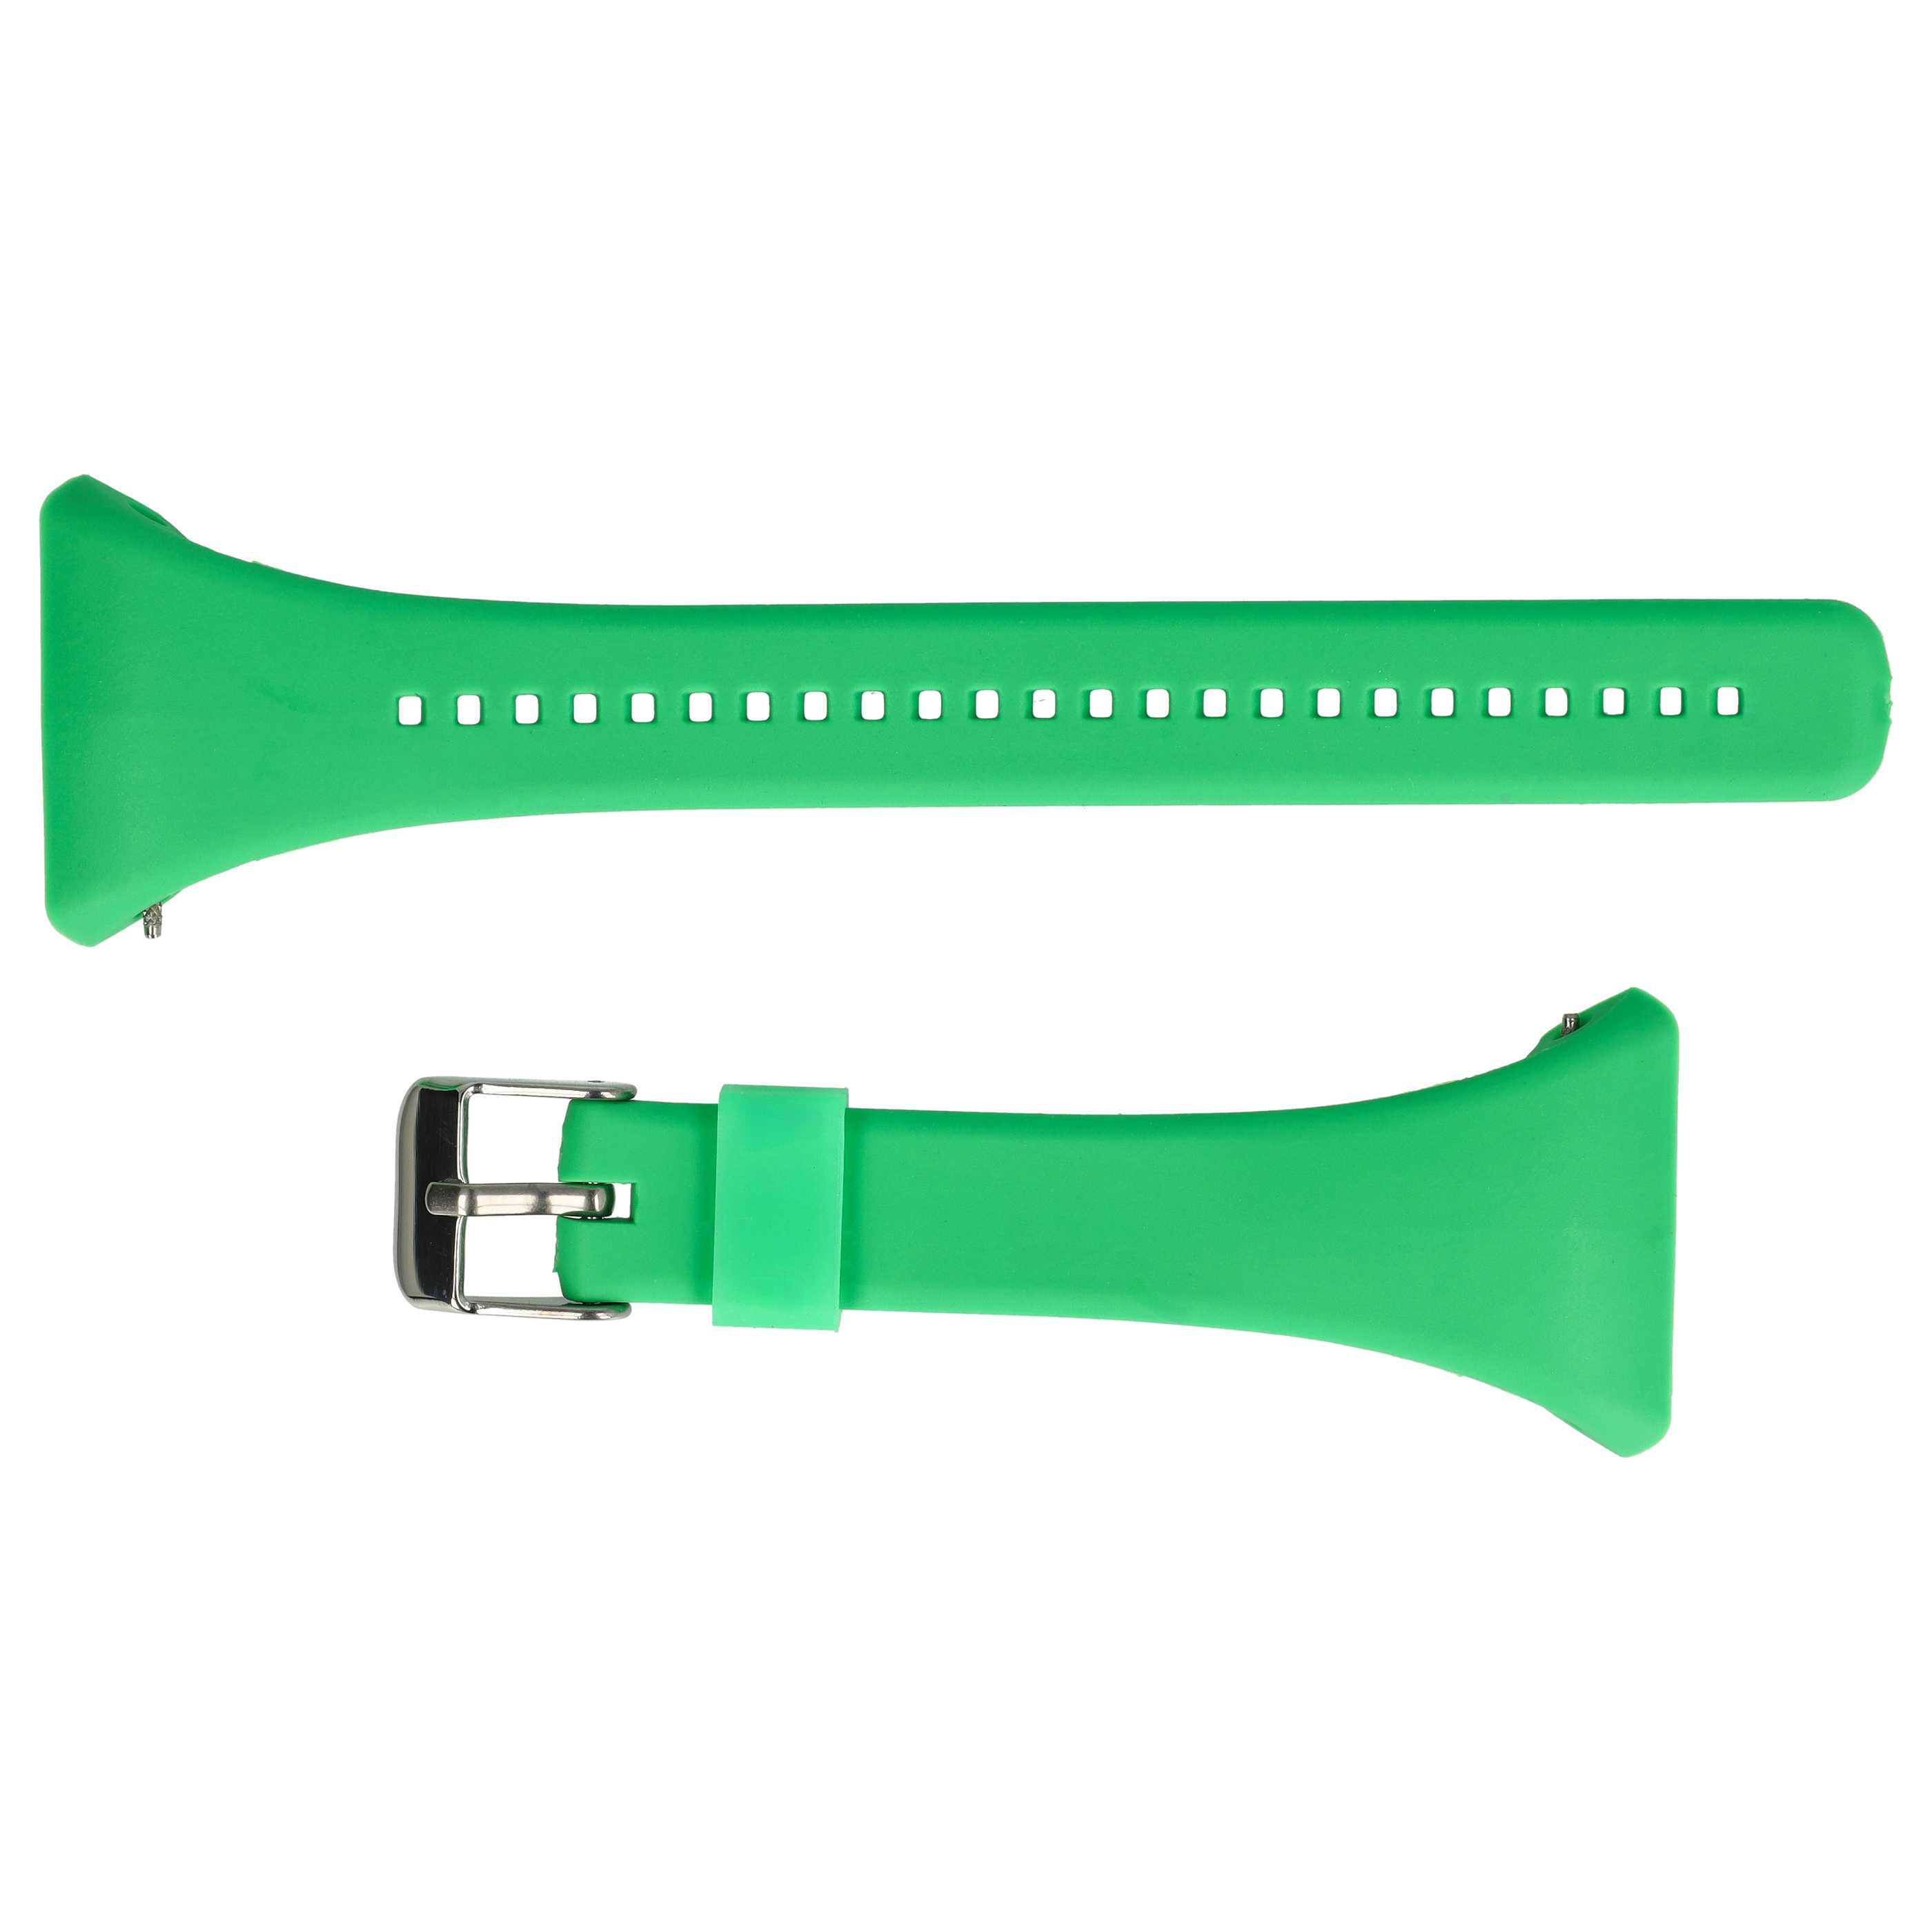 correa L para Polar smartwatch - largo 11,5cm + 8,5 cm, verde